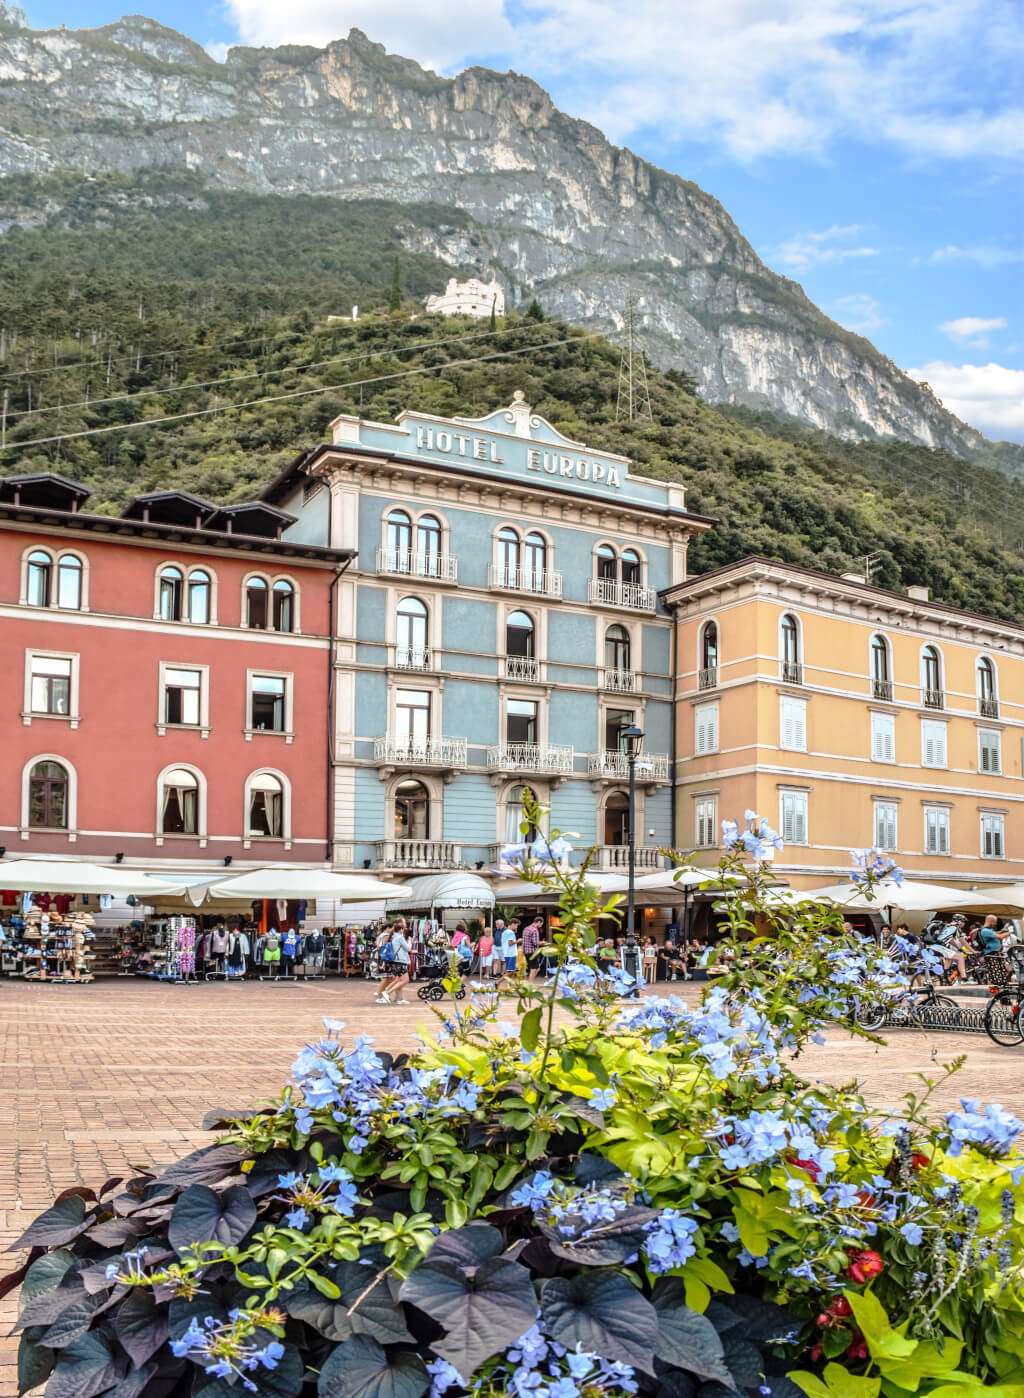 Your visit to Riva del Garda